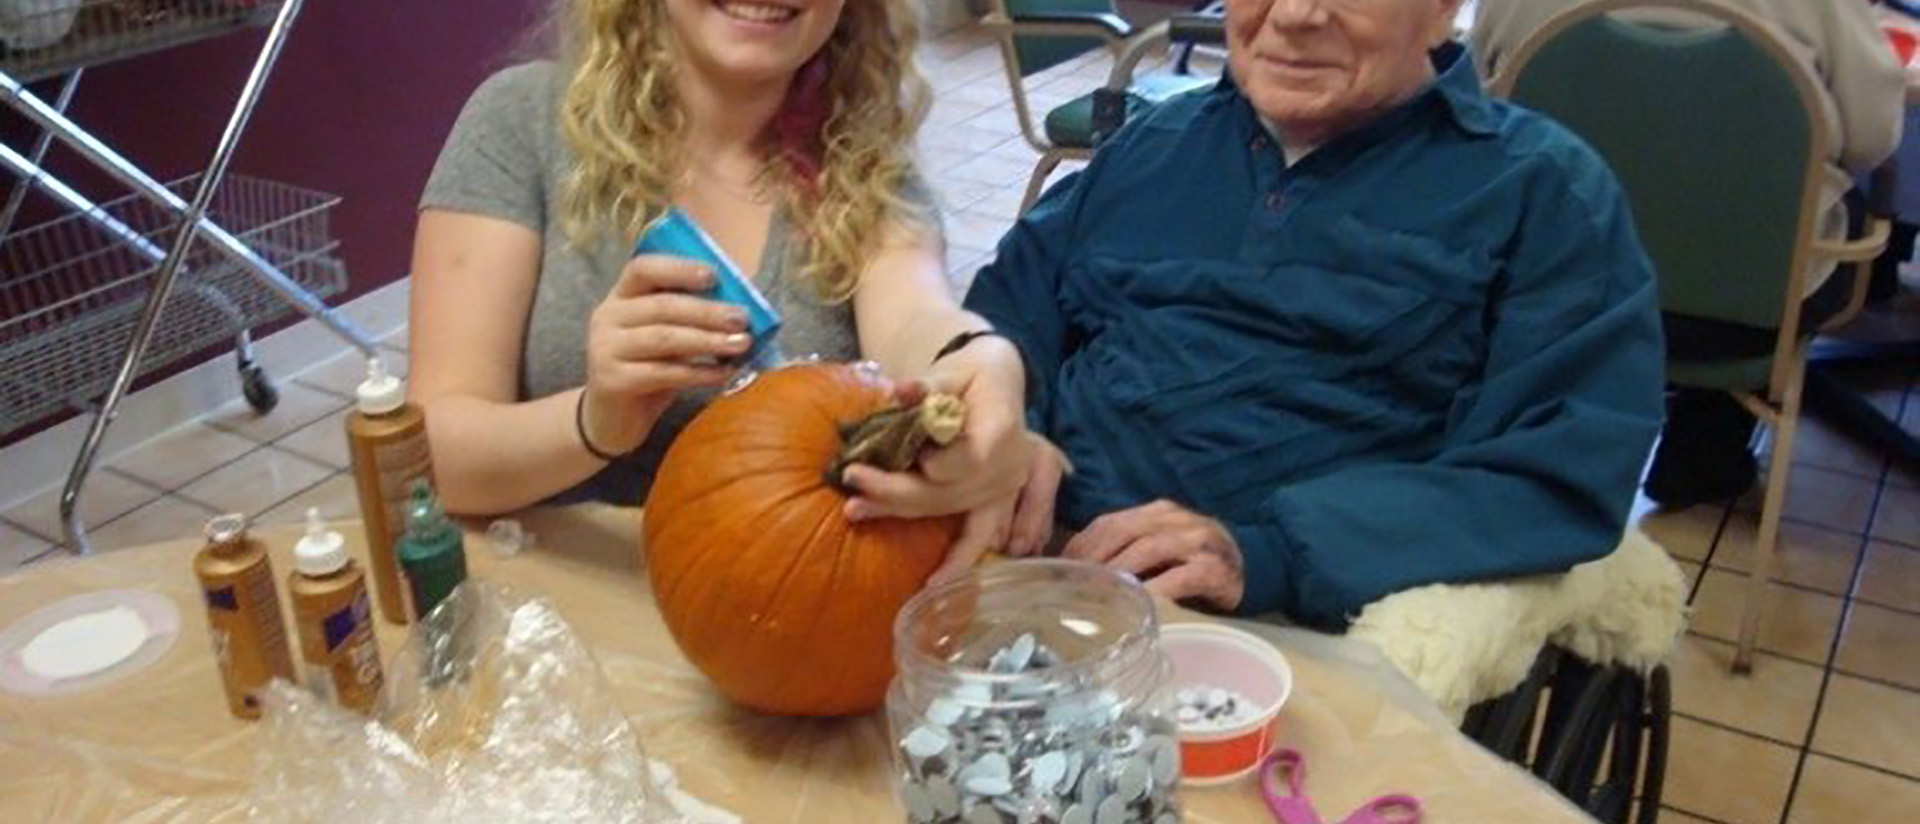 CHAASE practicum student volunteering with pumpkin carving